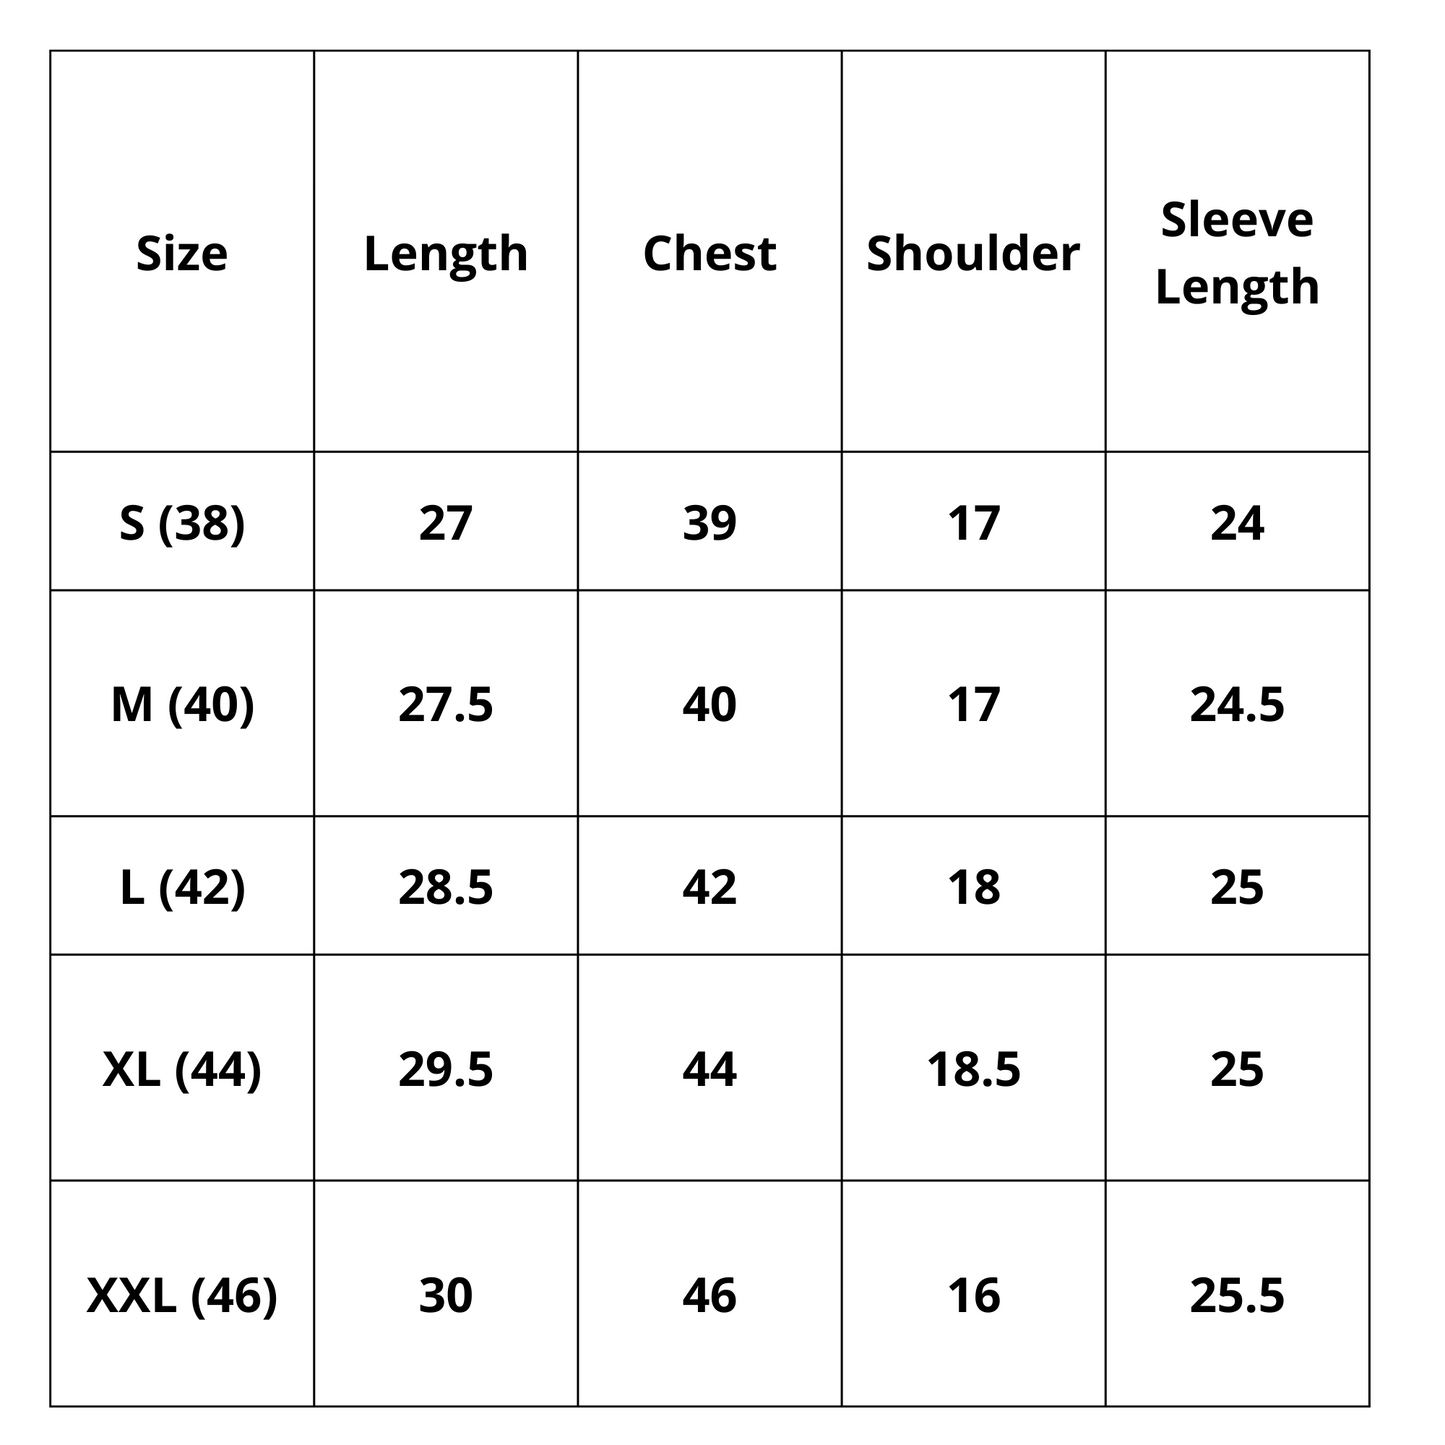 Brown and Grey Slim Fit Premium Tie Dye Unisex Shirt